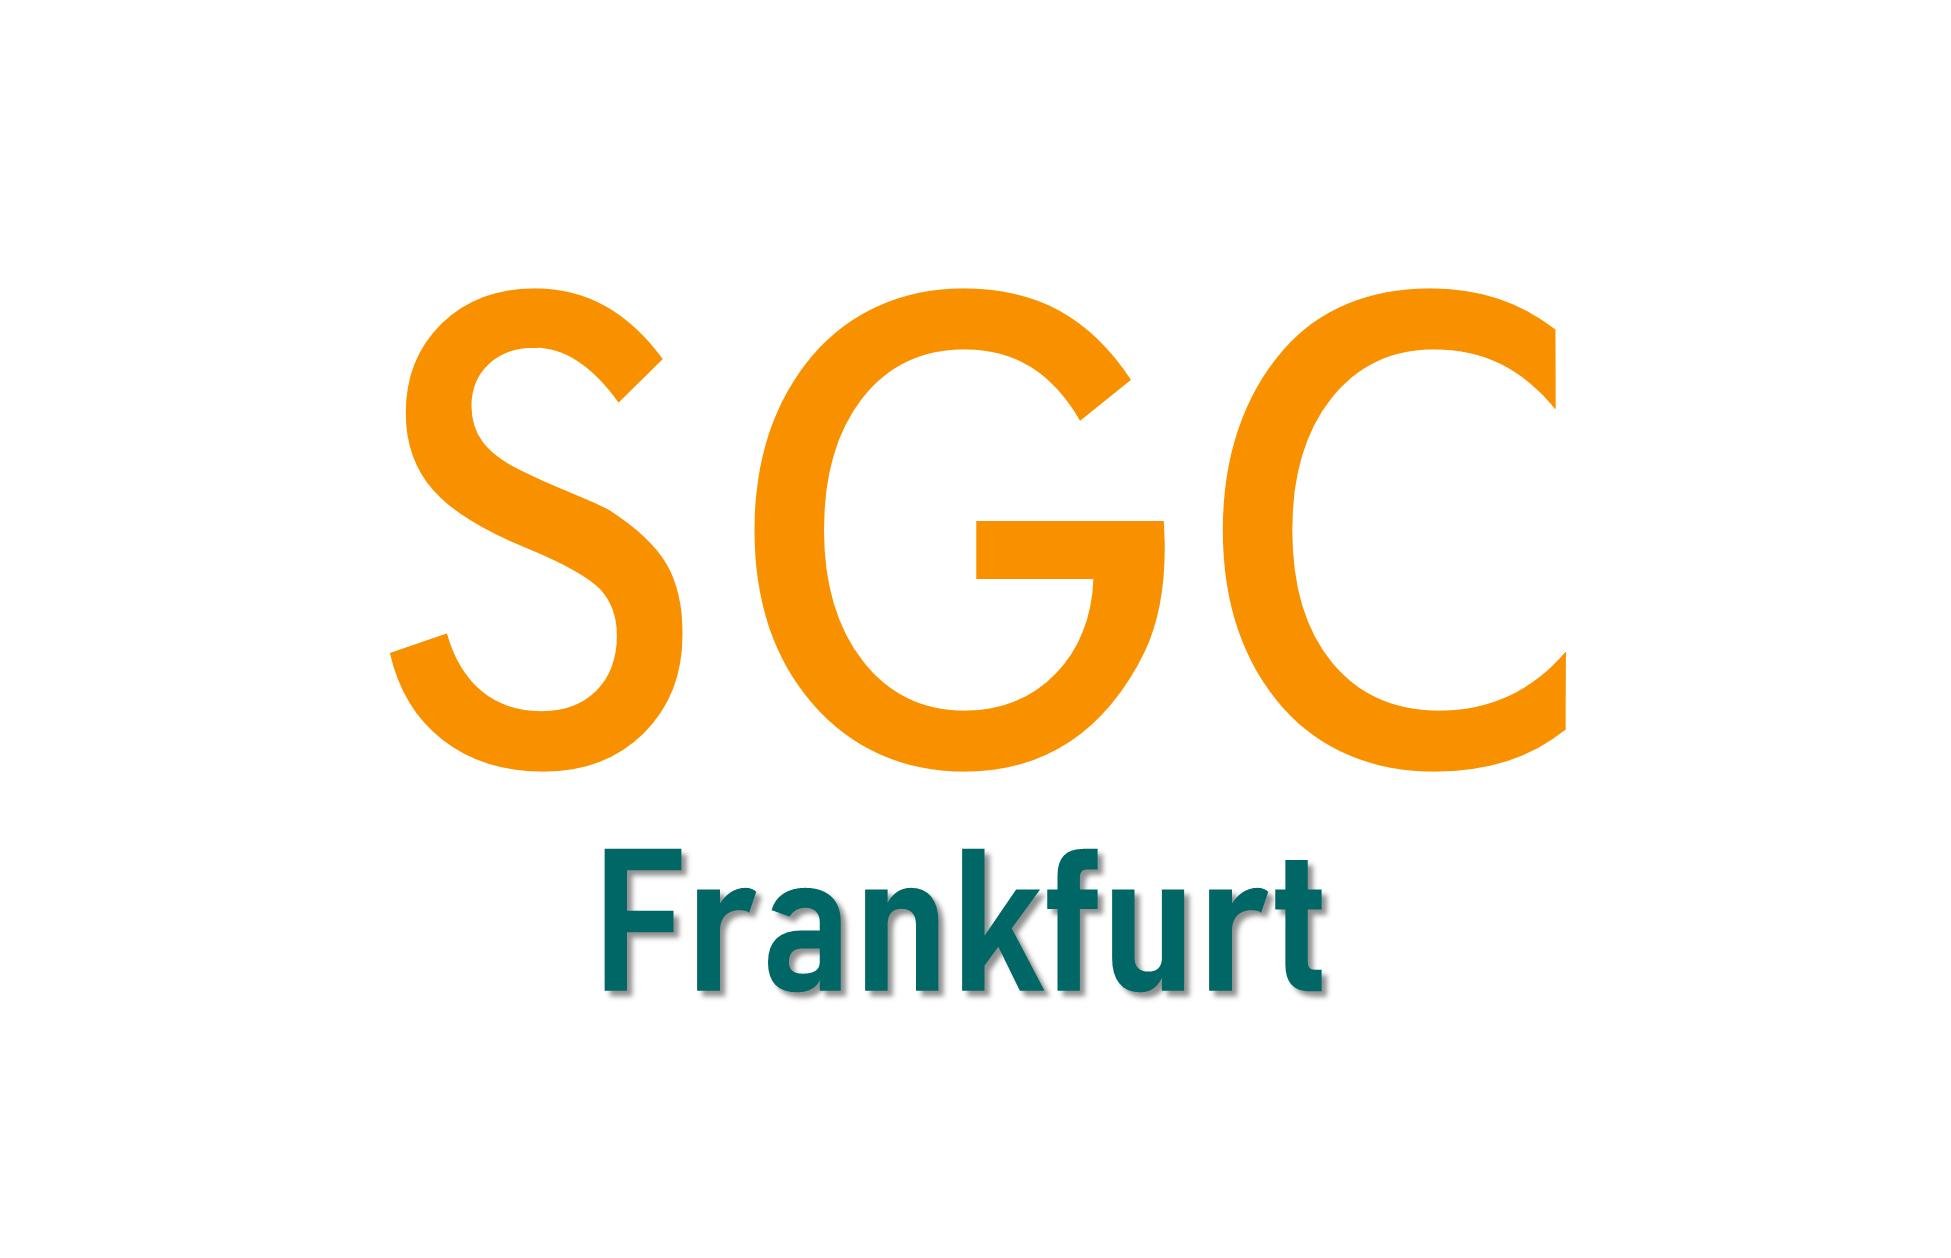 The SGC Frankfurt